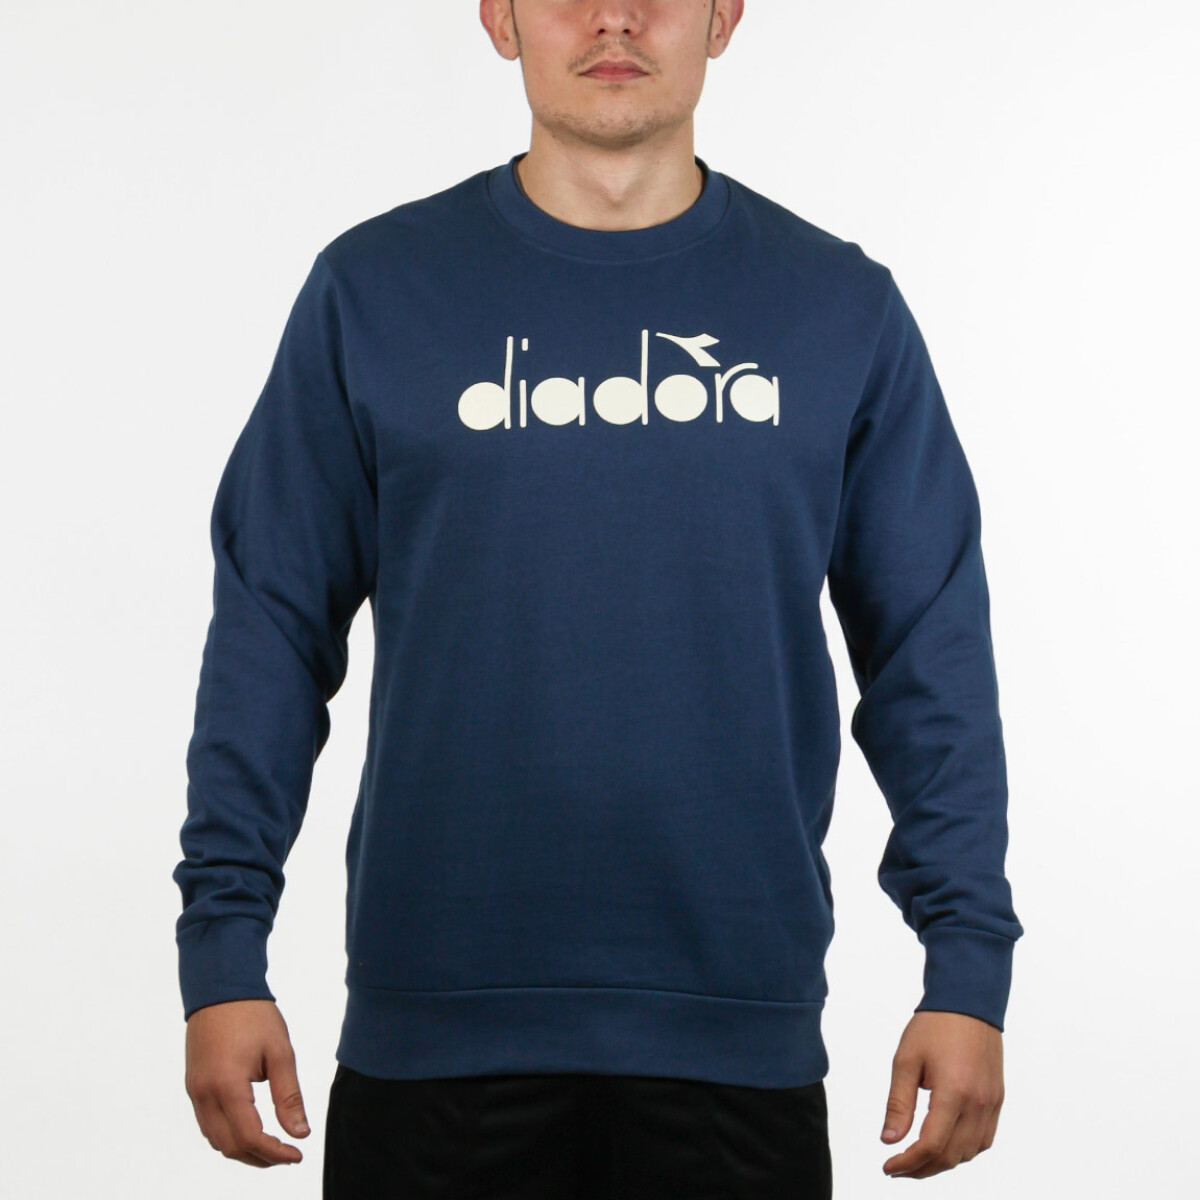 Diadora Men's Crew Sweater Print - Navy - Marino 